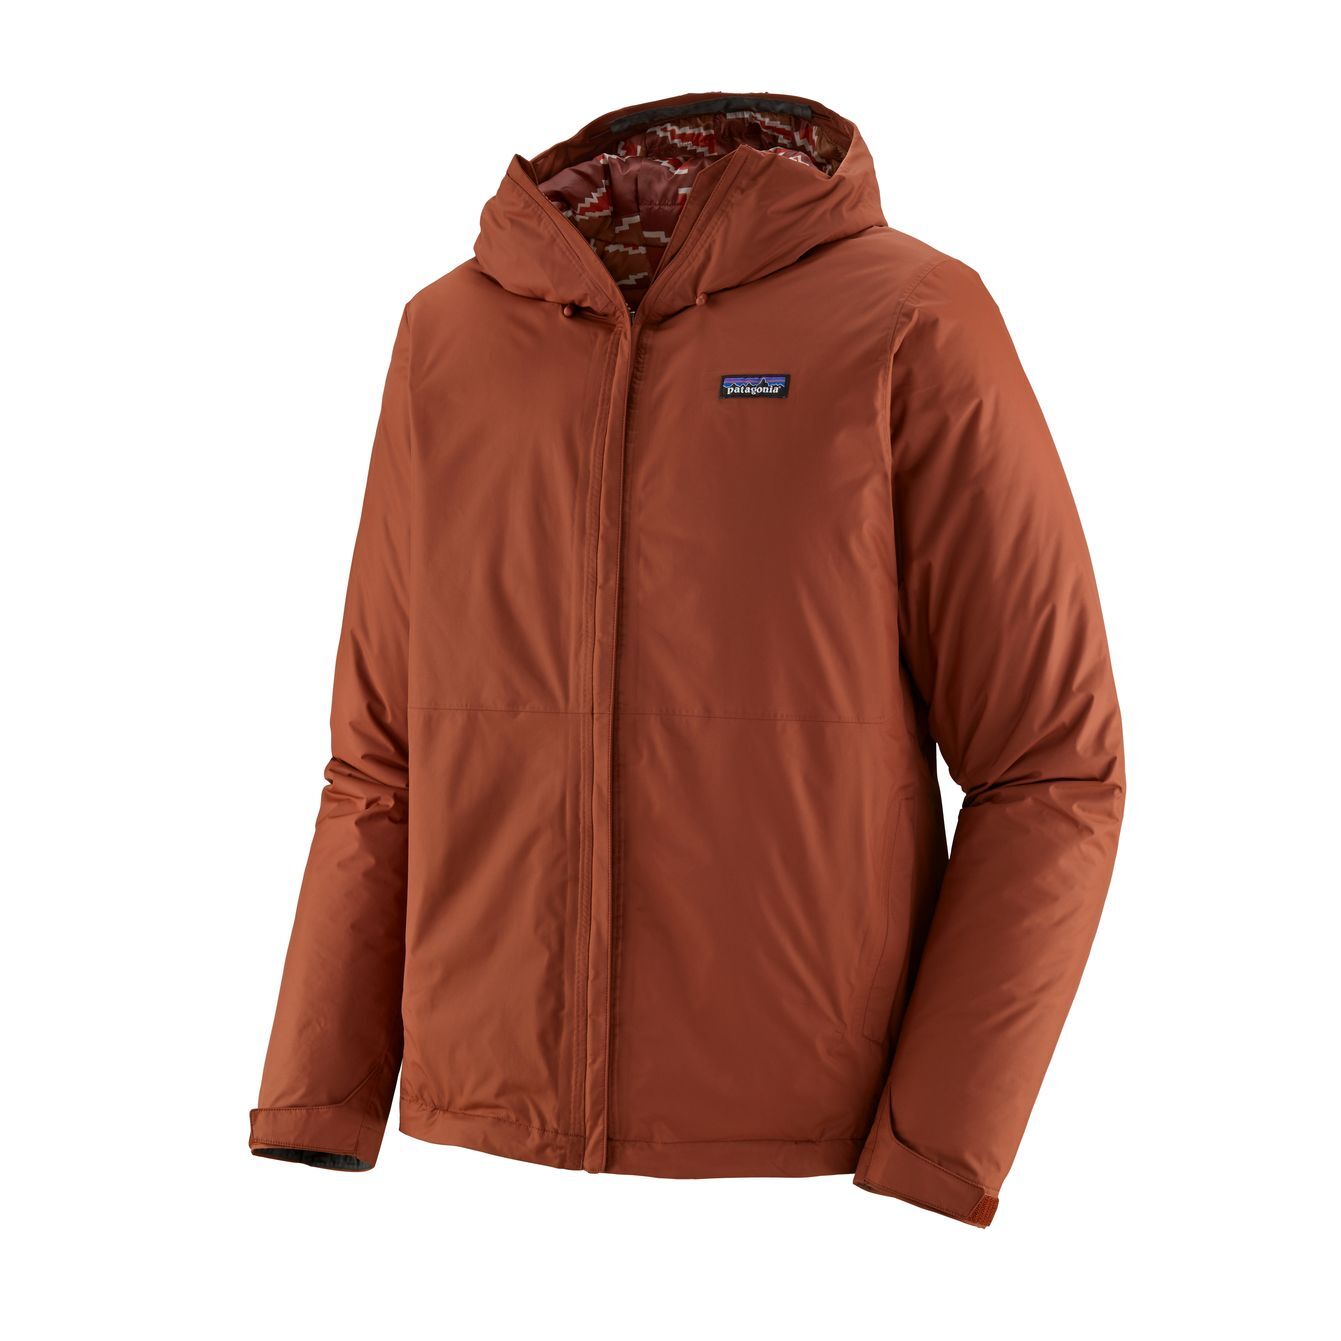 Patagonia Insulated Torrentshell Jacket - Waterproof jacket - Men's